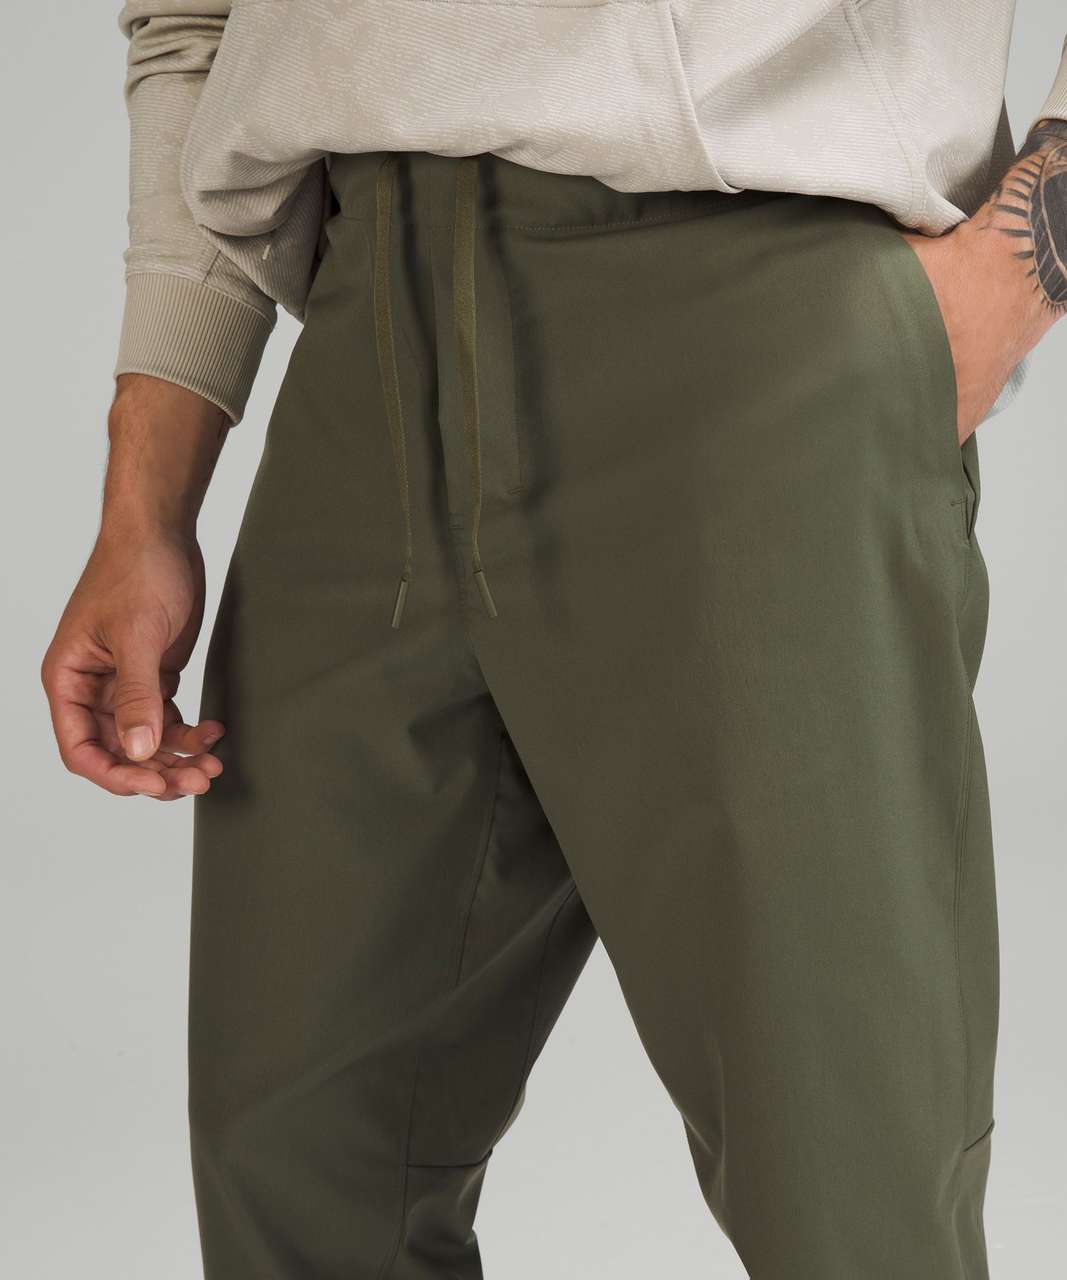 Lululemon New Venture Trouser *Twill Fabric - Medium Olive